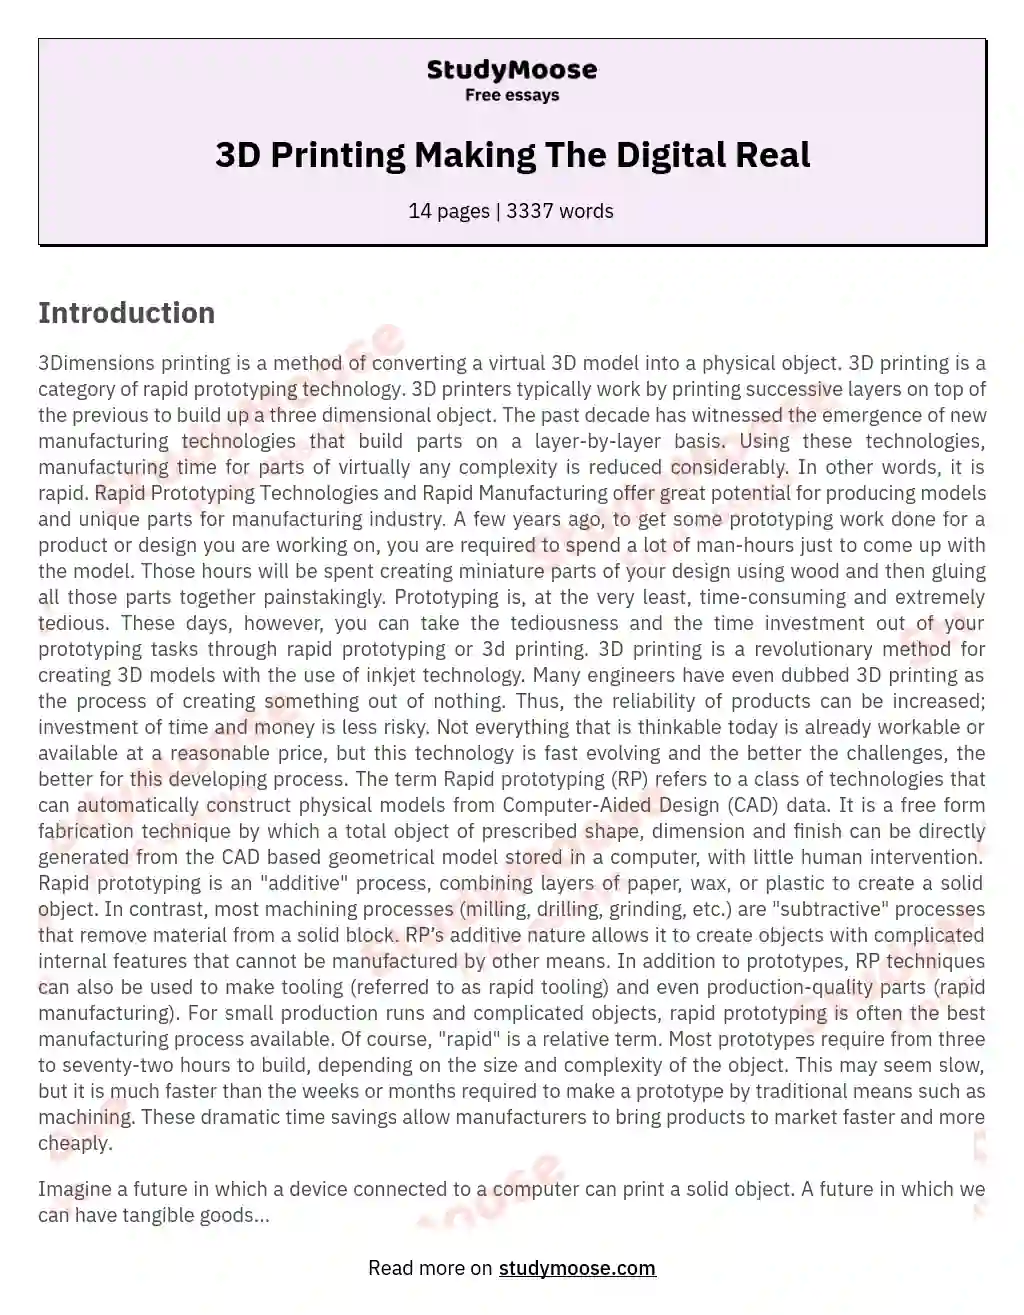 3D Printing Making The Digital Real essay